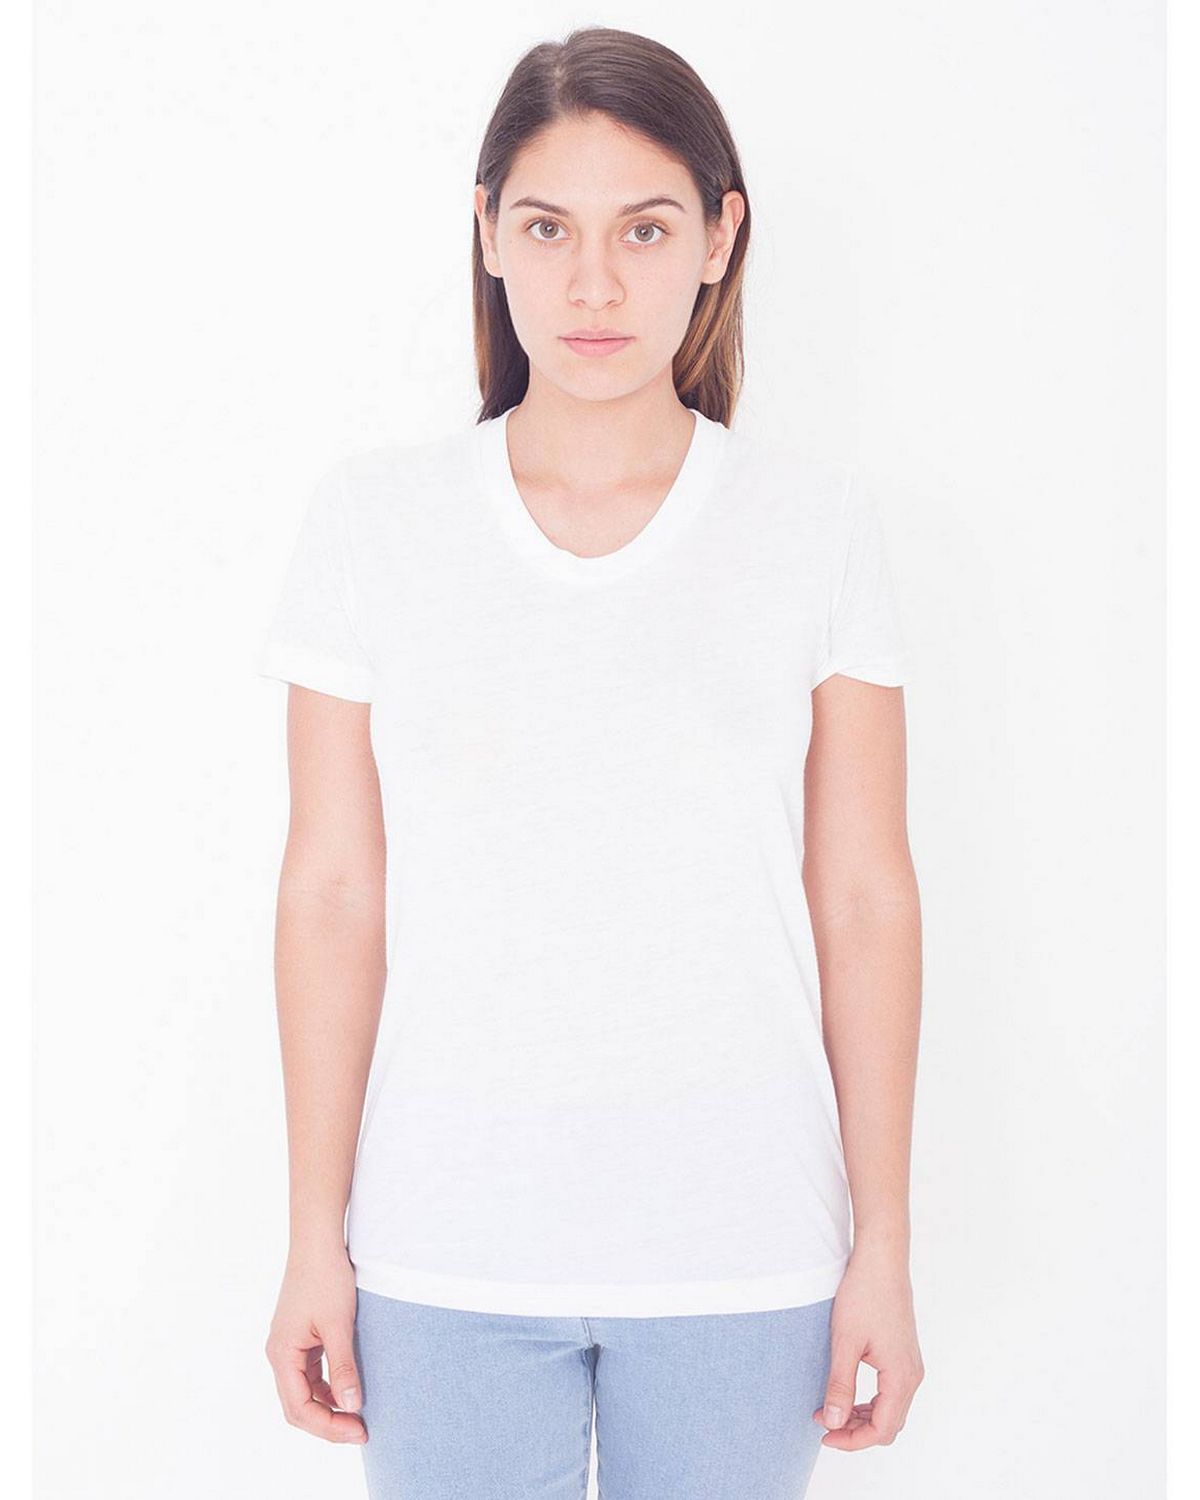 American Apparel PL301W Women's Sublimation T-Shirt